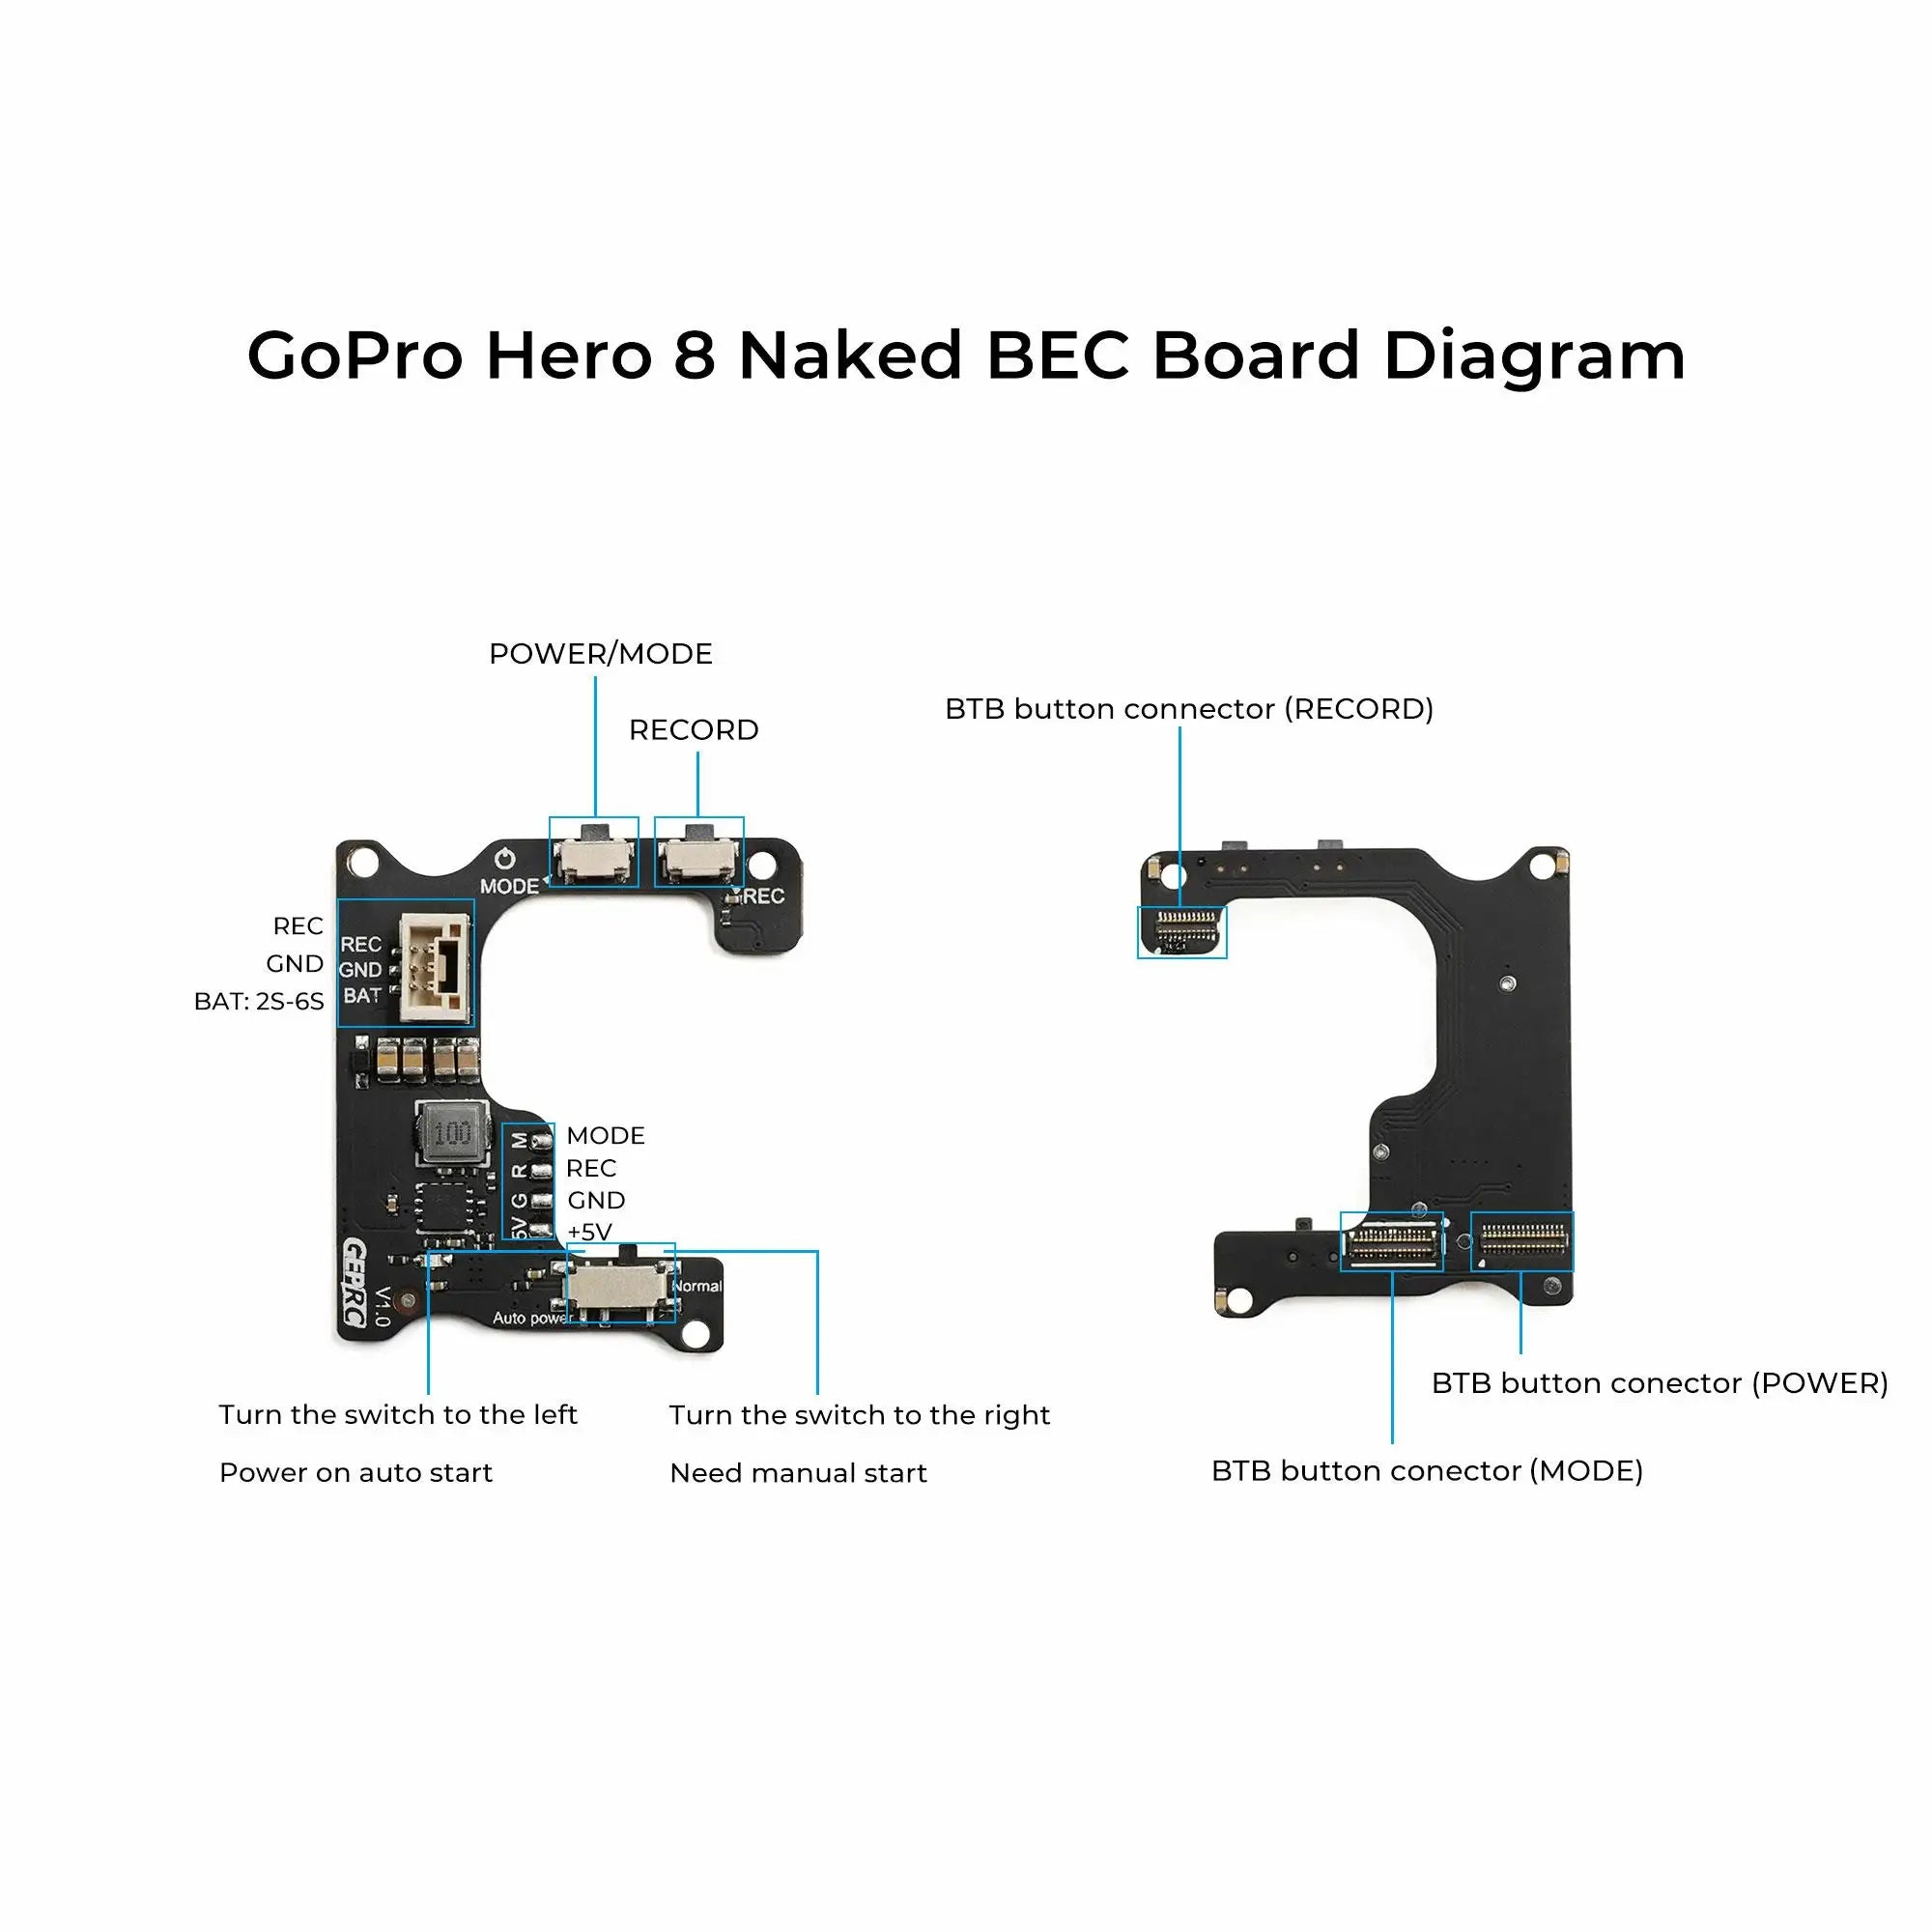 GEPRC Naked GoPro Hero 8 Case, GoPro Hero 8 Naked BEC Board Diagram POWERIMODE BTB button connector (